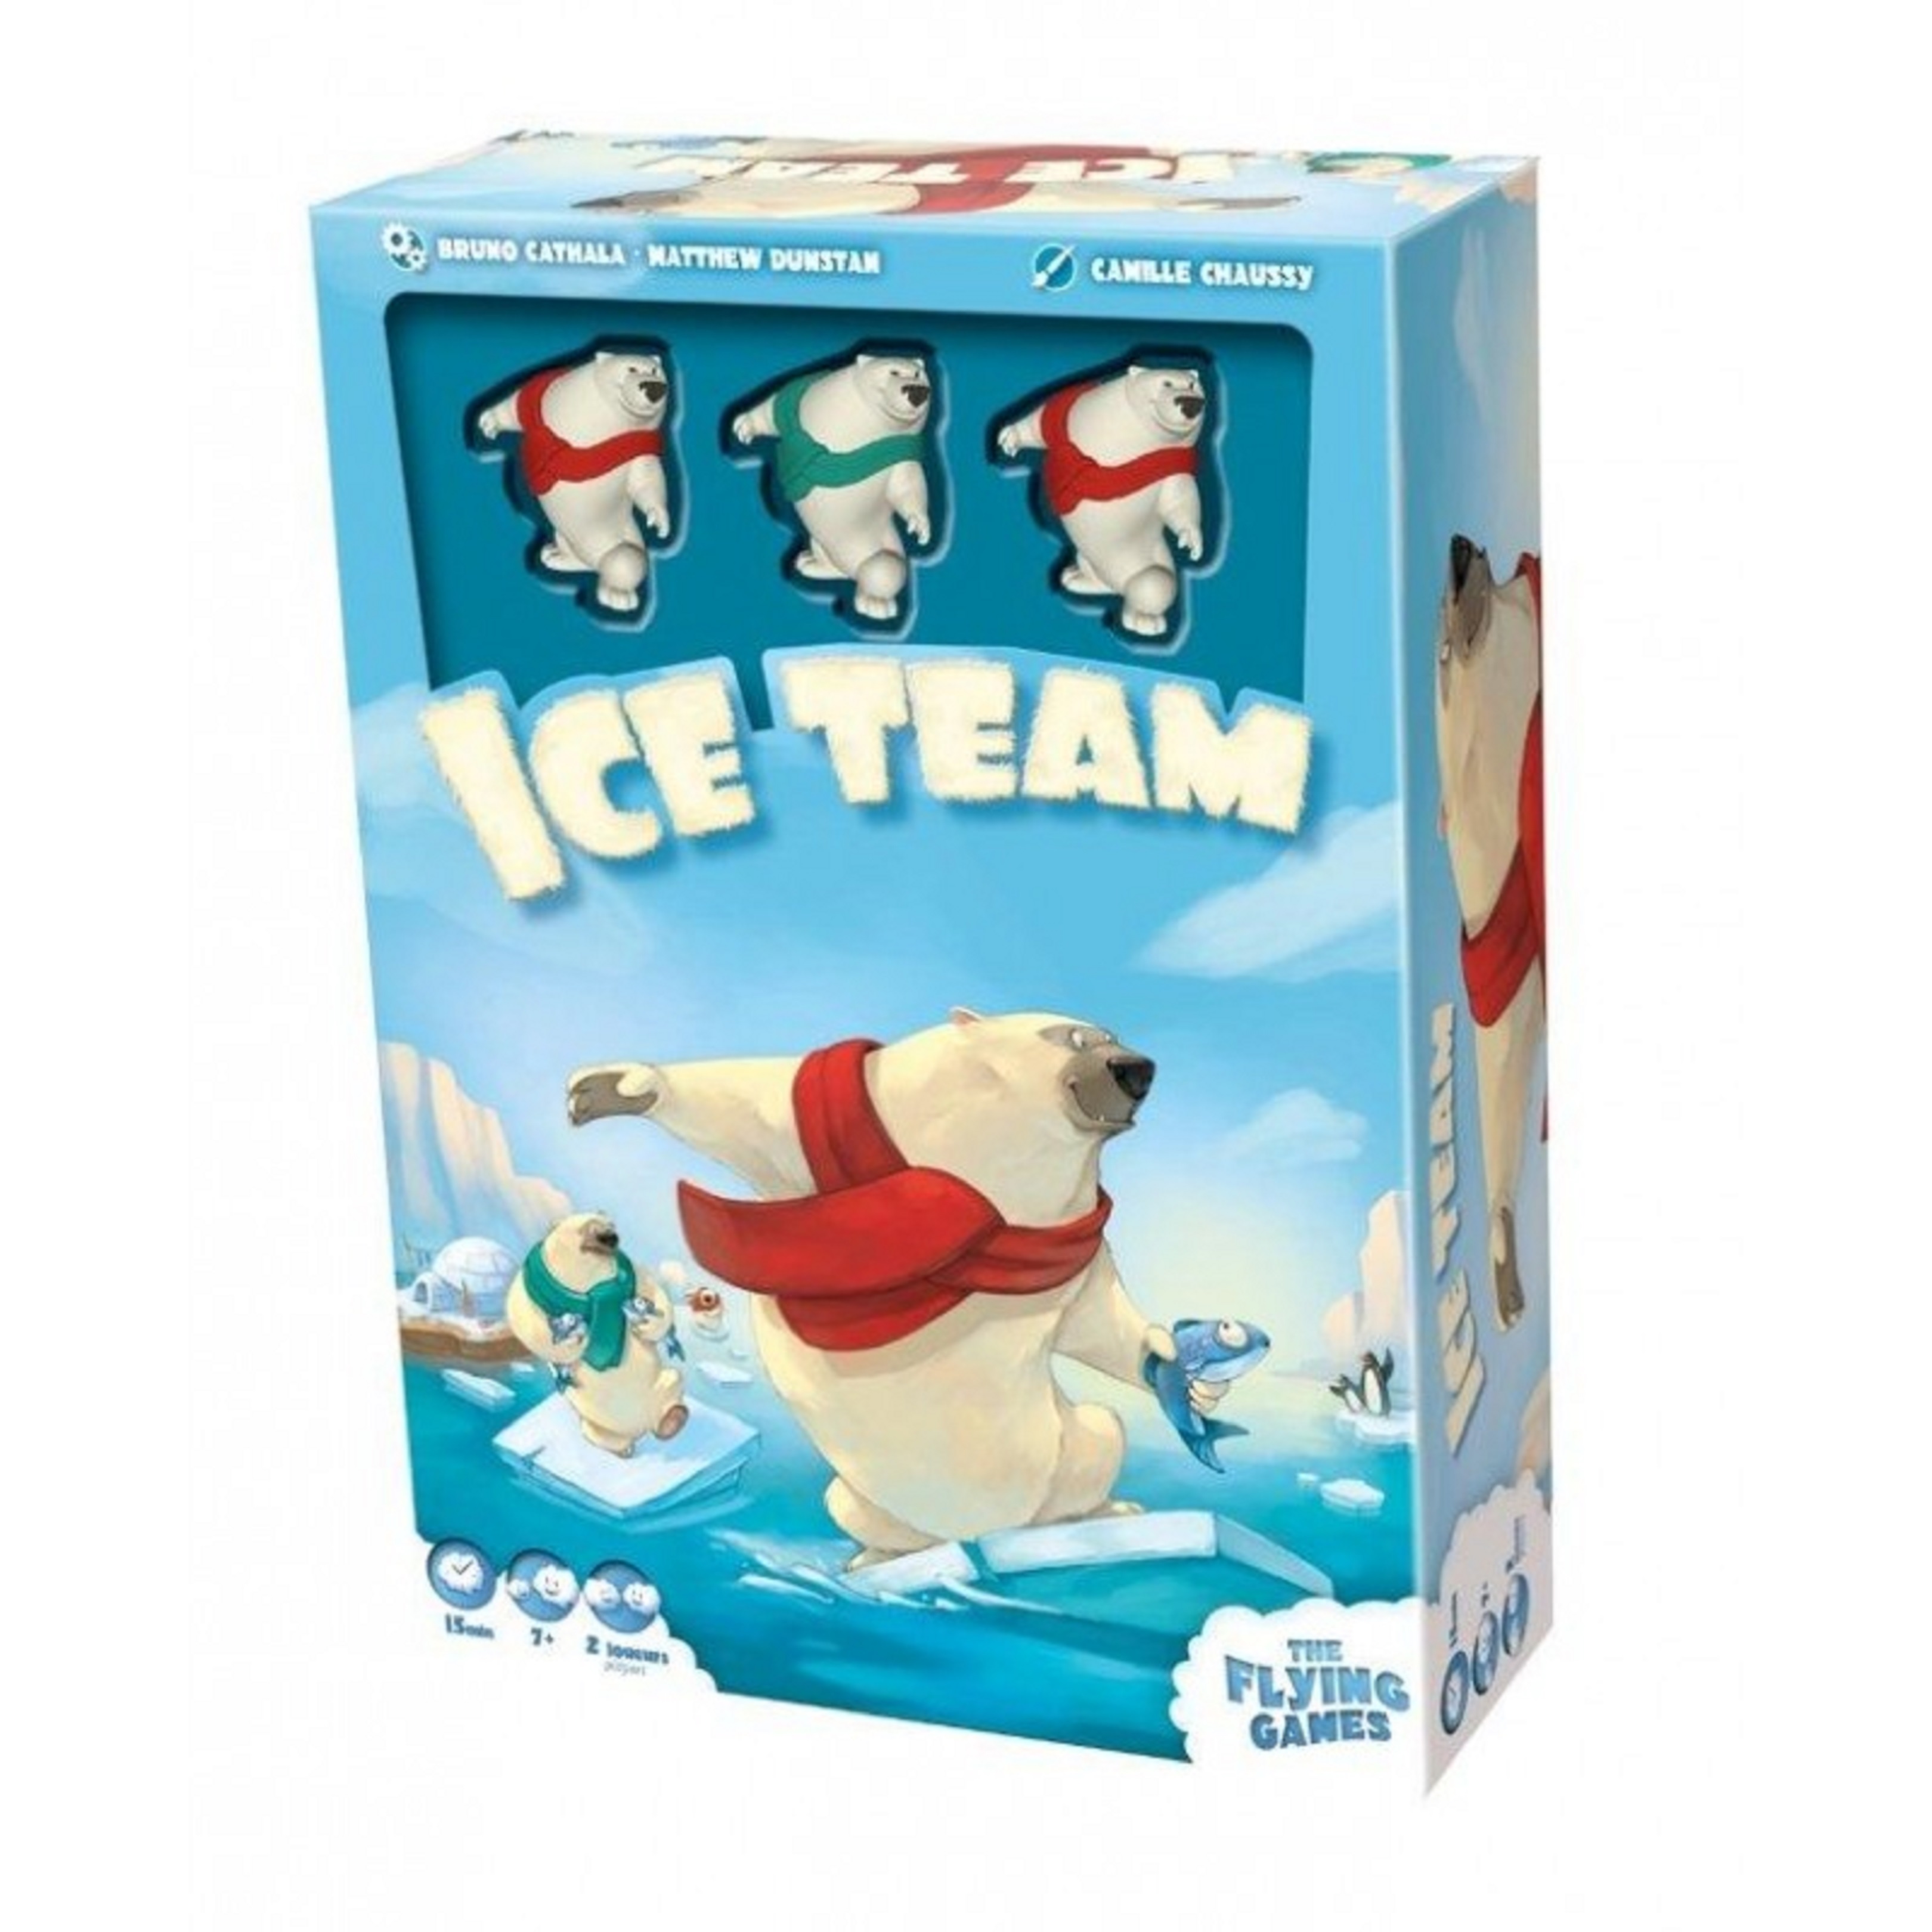 Joc interactiv - Ice Team | The Flying Games image0